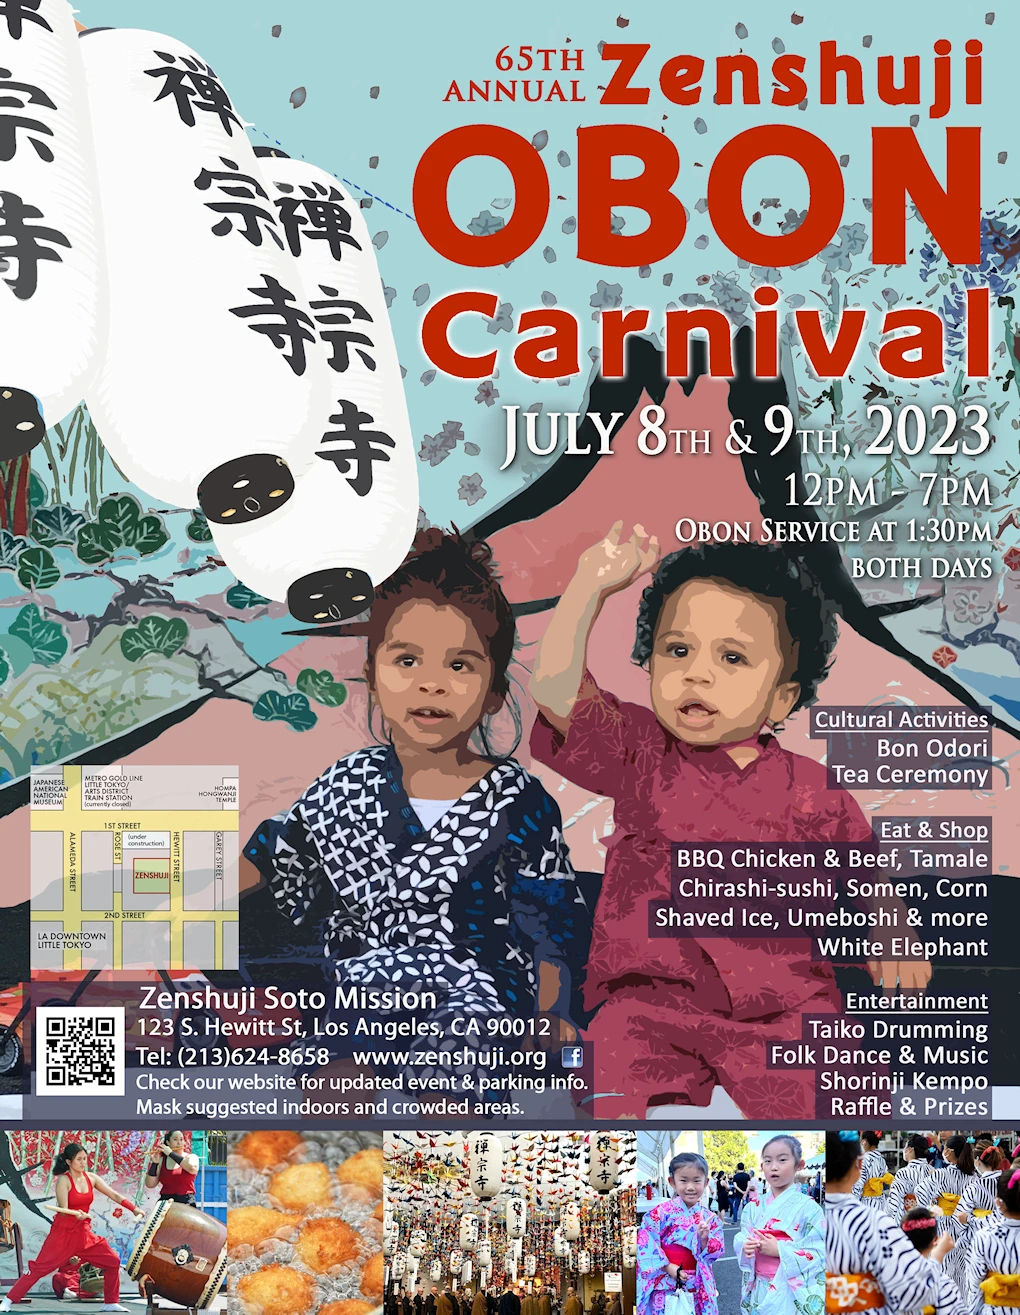 2023 Zenshuji Soto Mission Annual Summer Obon Matsuri Festival Event, Japantown Los Angeles (Japanese Food, Taiko, Performances, Games..) (2 Days) 